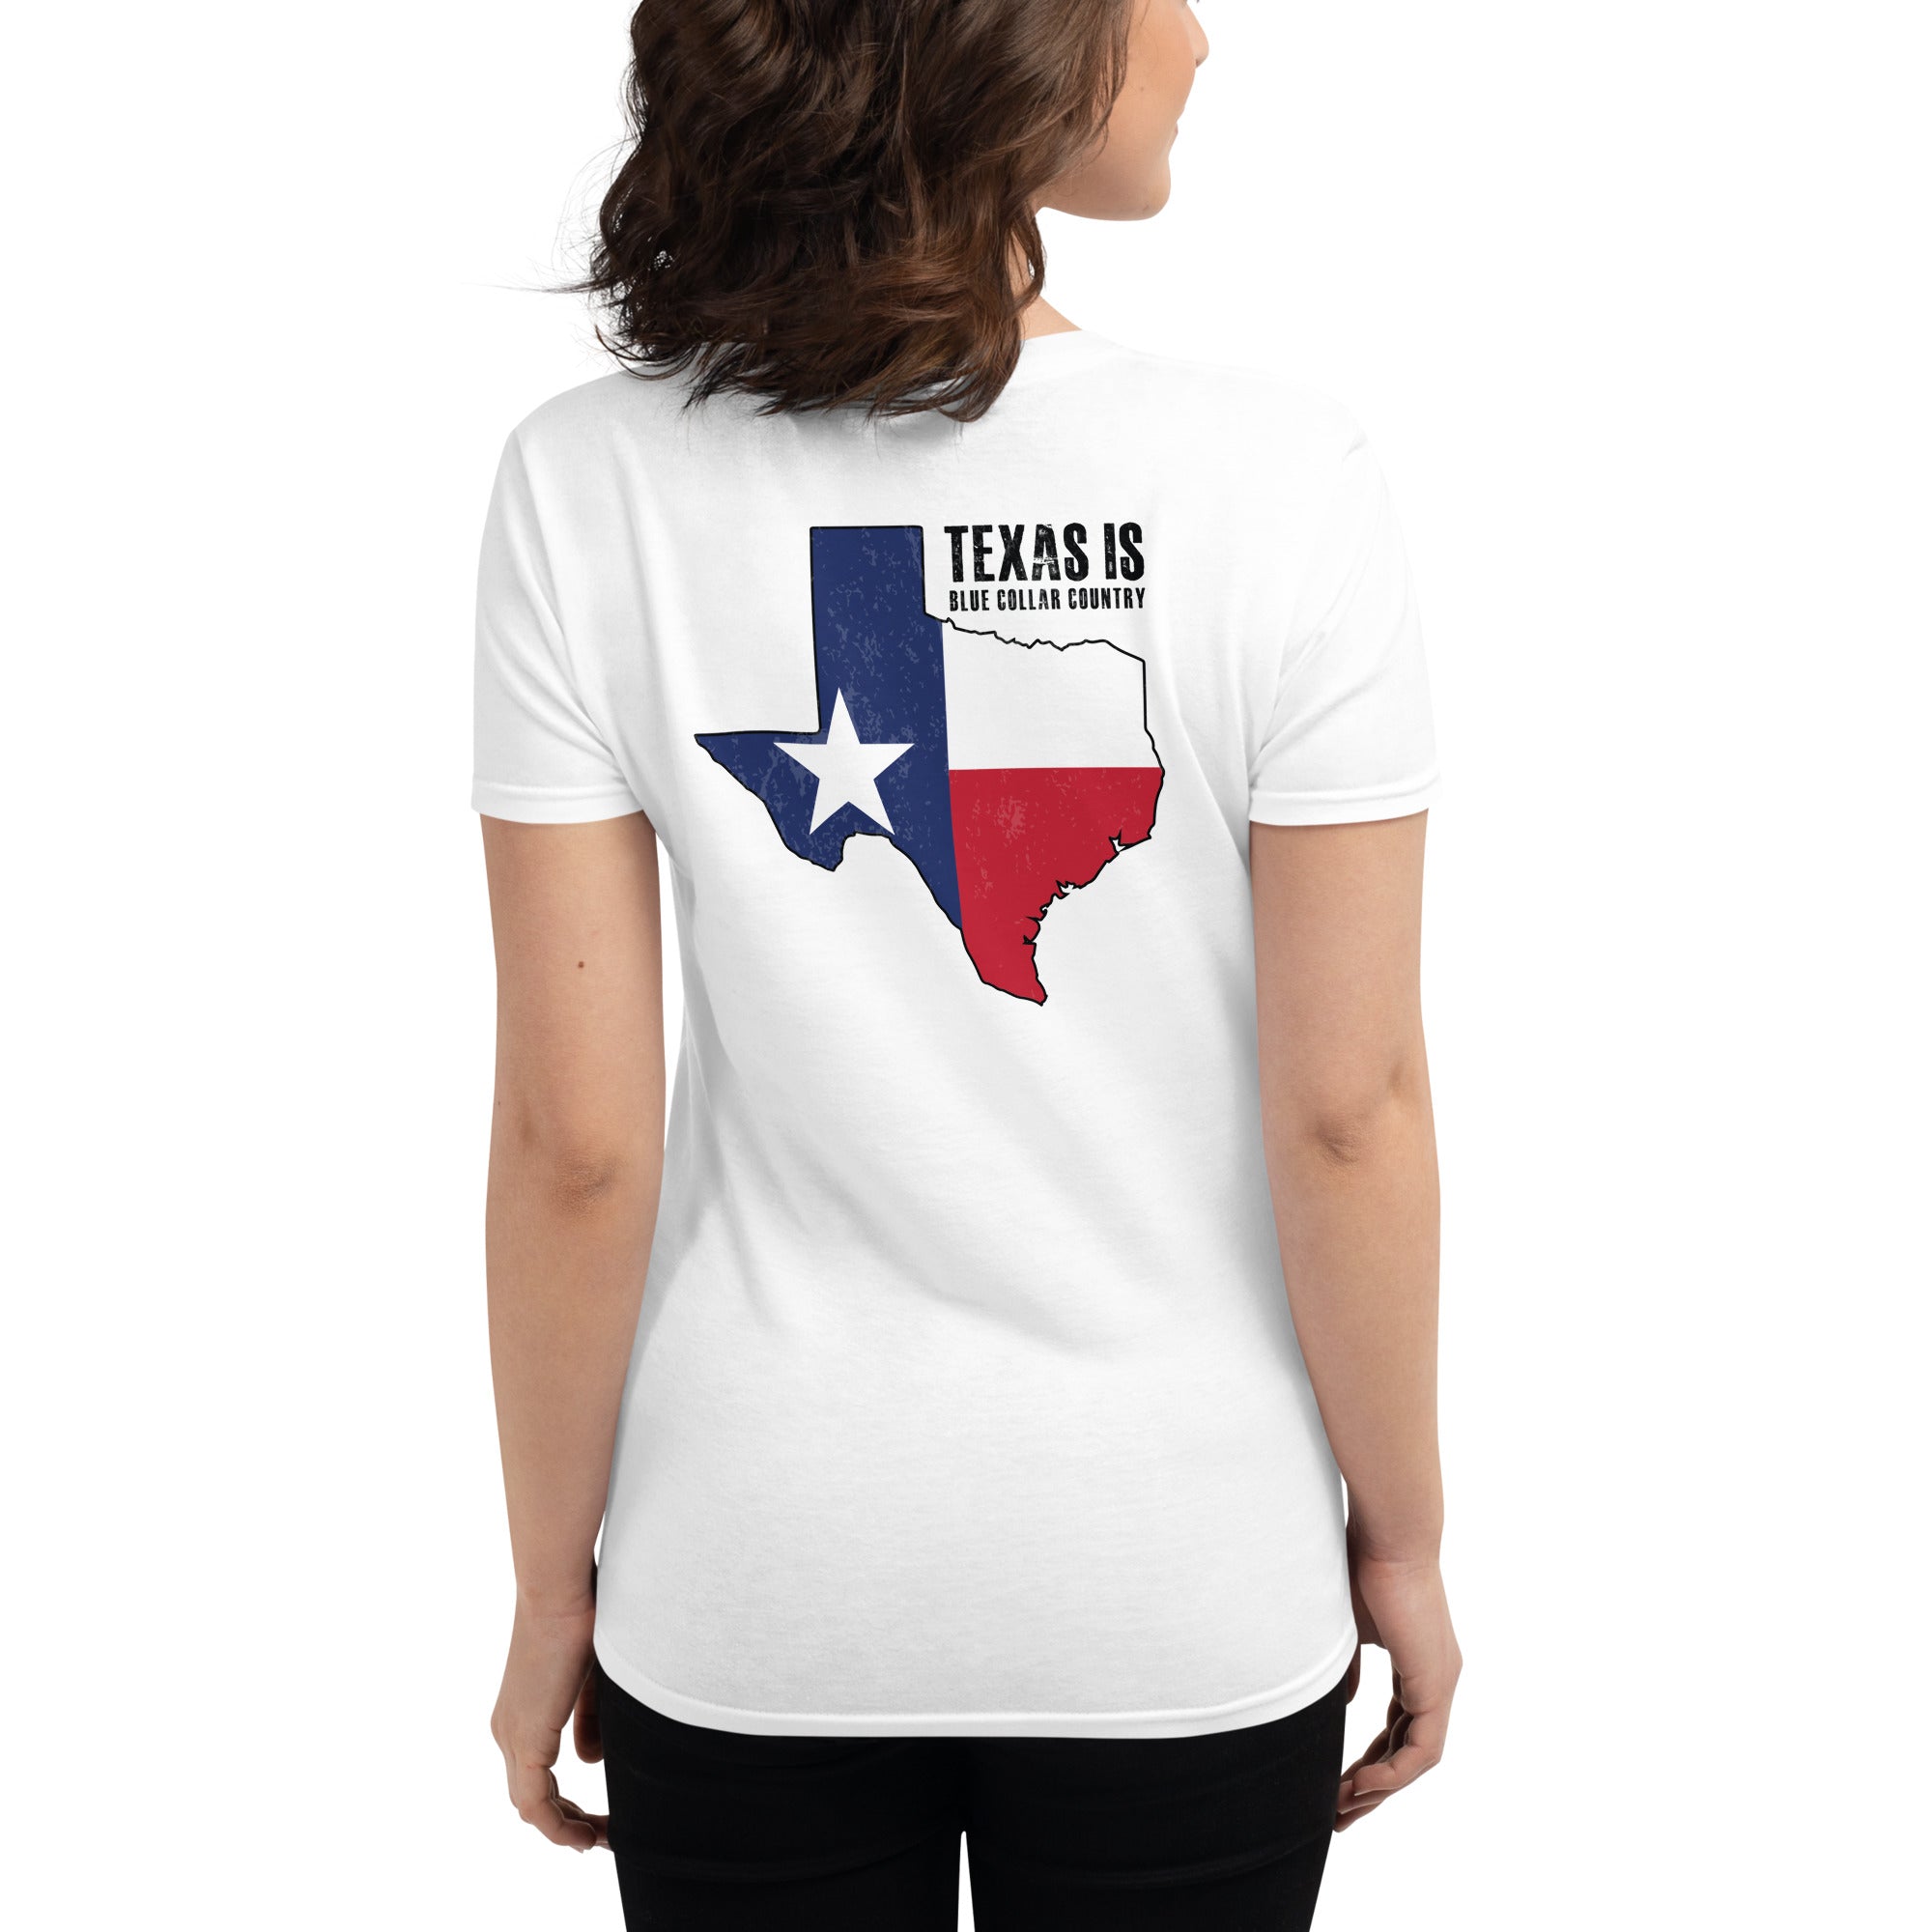 Texas is Blue Collar Country  I  Women's short sleeve t-shirt